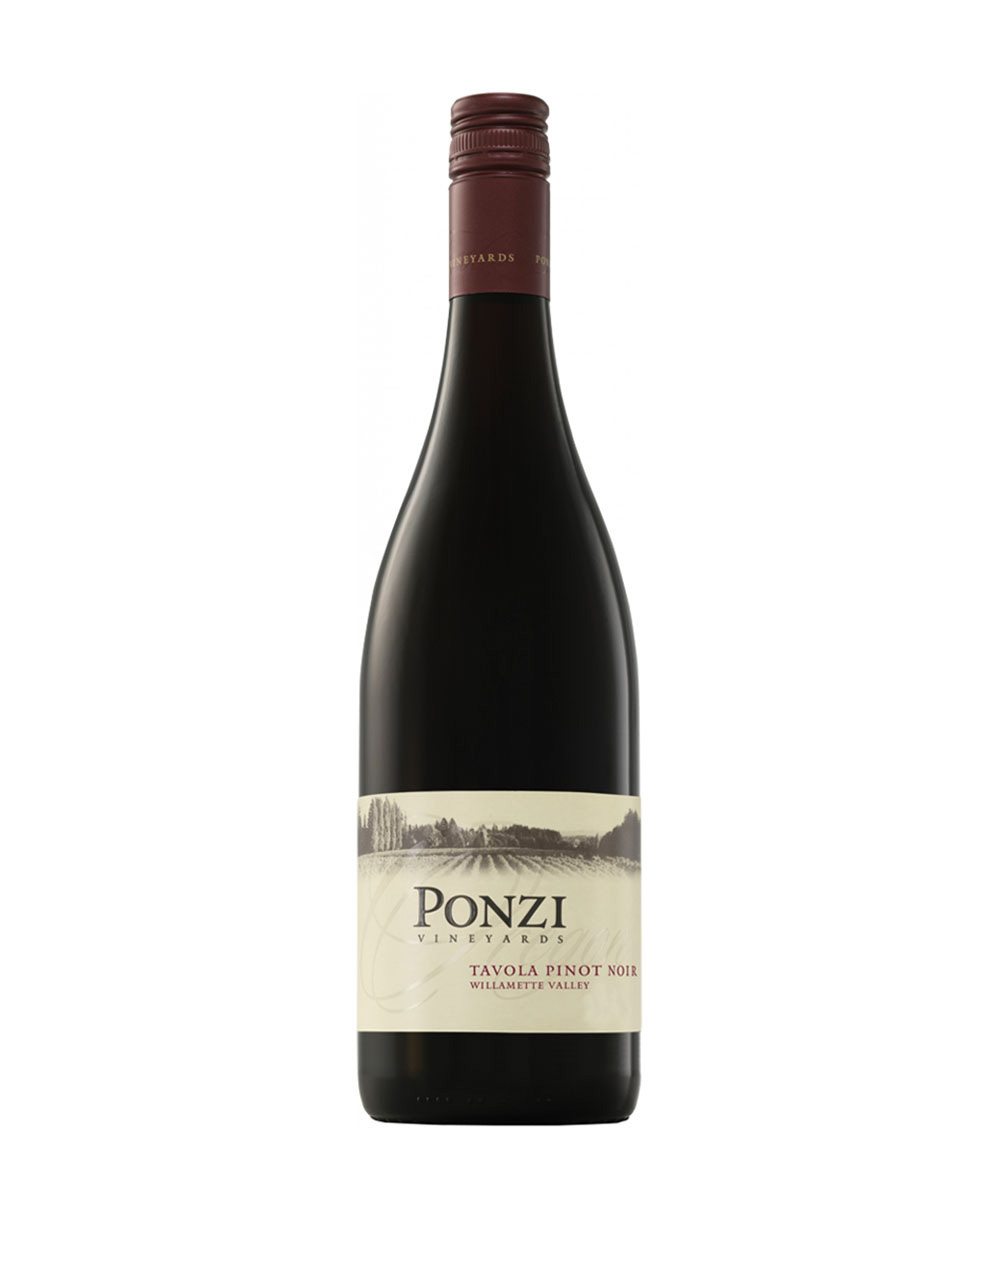 Ponzi Pinot Noir 2016 Willamette Valley